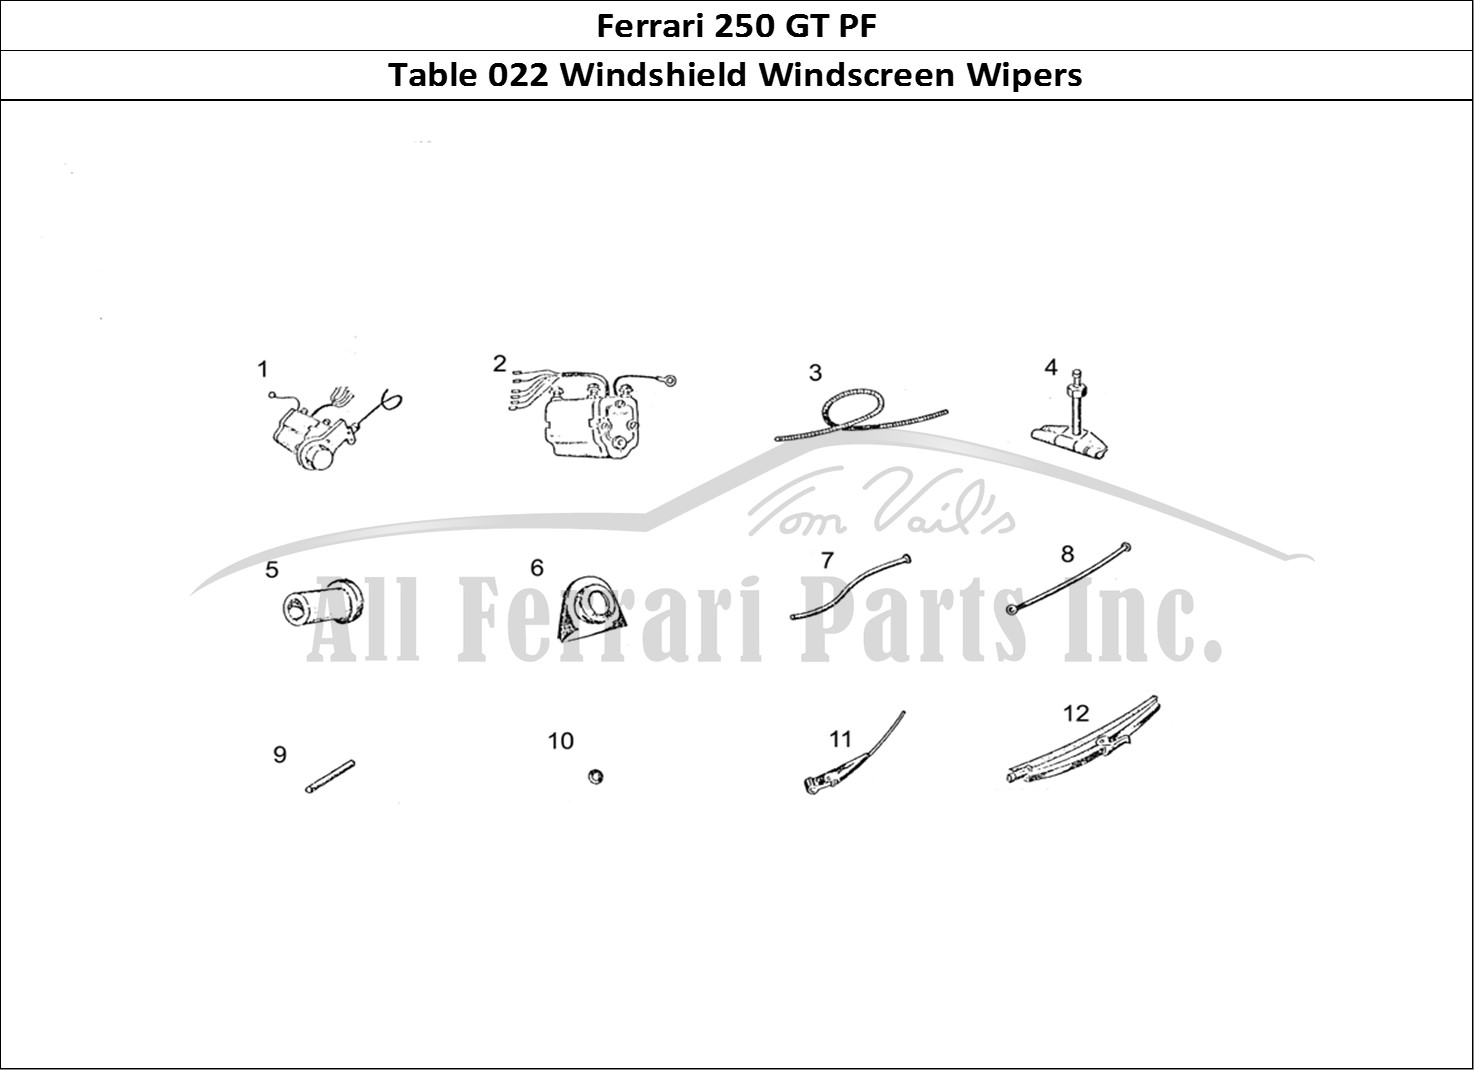 Ferrari Parts Ferrari 250 GT (Coachwork) Page 022 Wipers